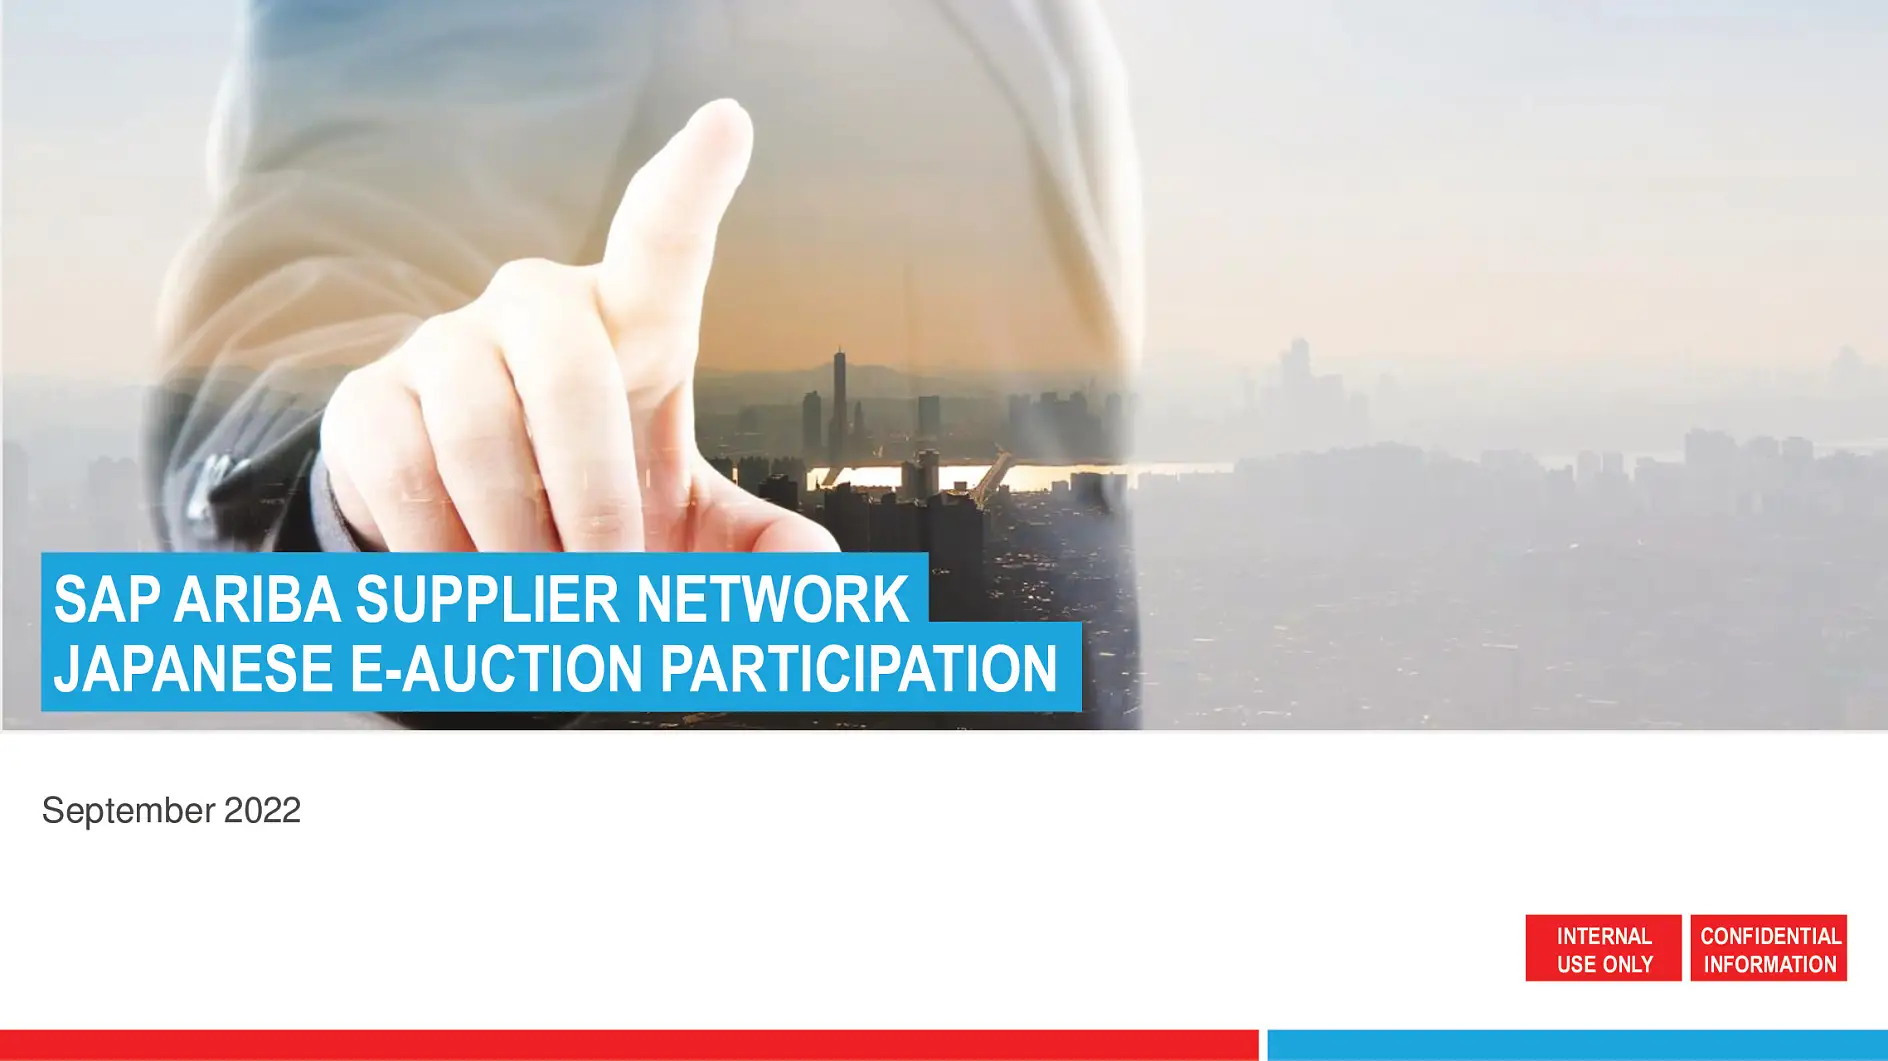 tesa - Supplier Participation in Japanese e-Auction